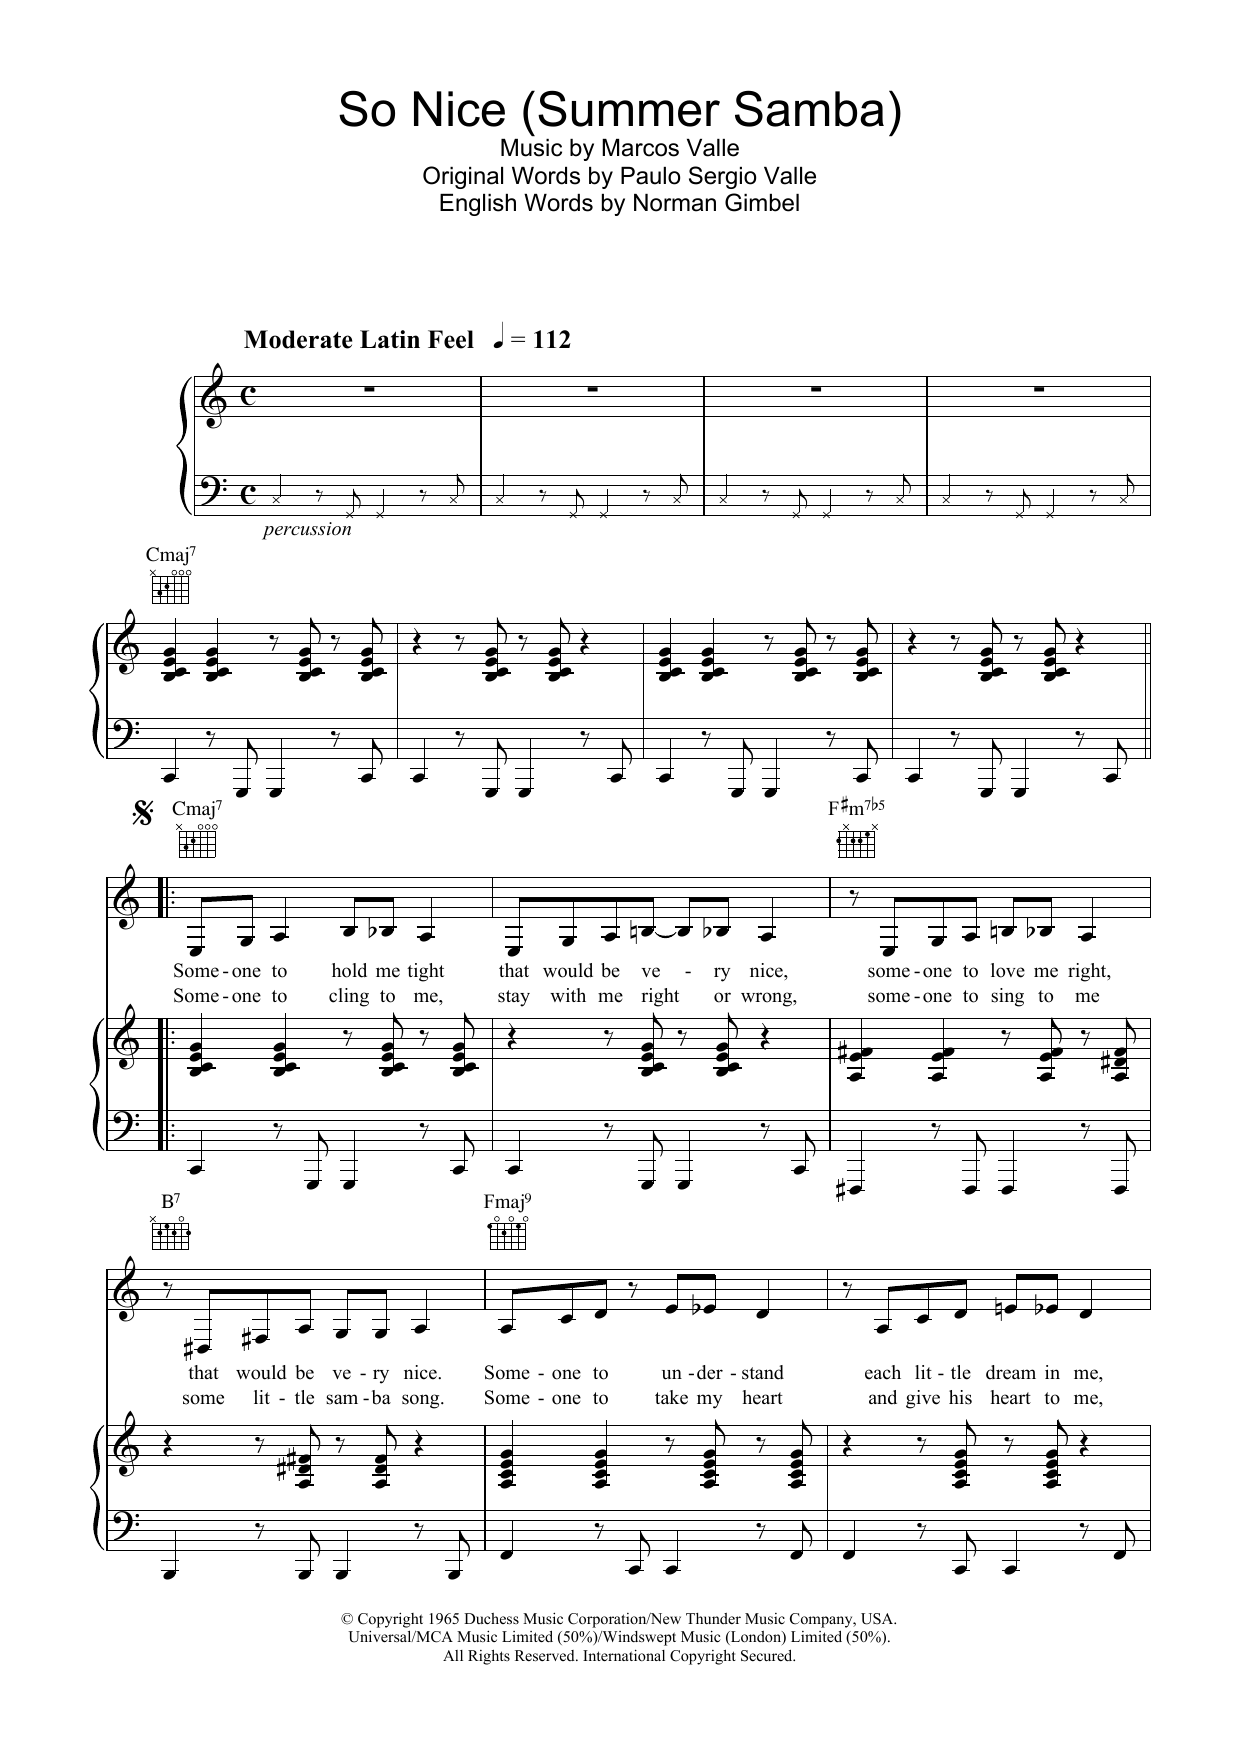 Bebel Gilberto So Nice (Summer Samba) sheet music notes and chords arranged for Piano, Vocal & Guitar Chords